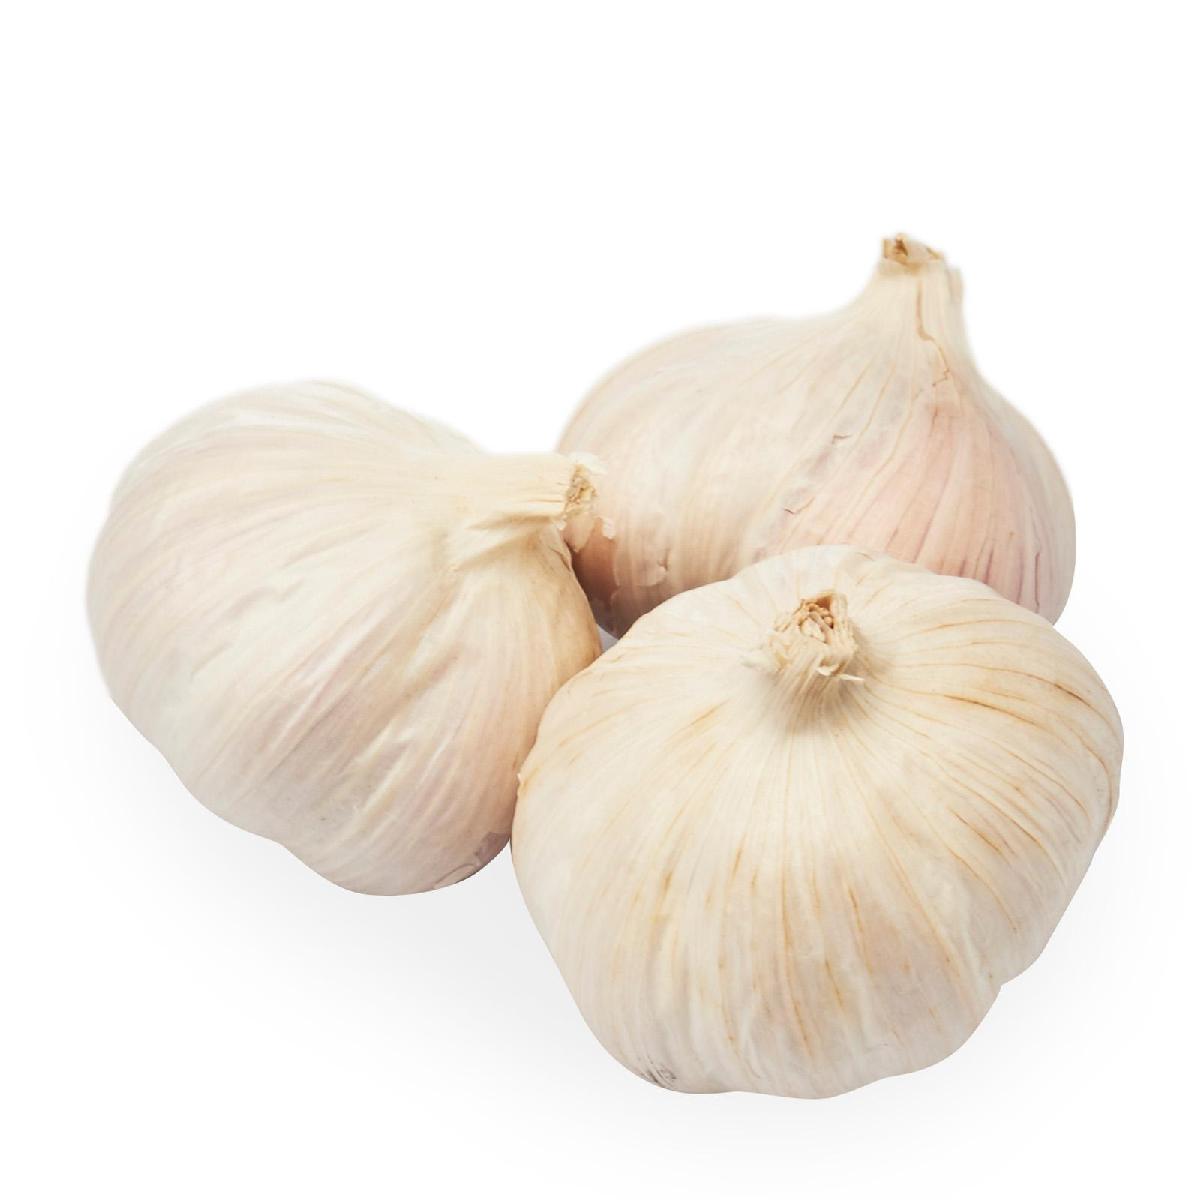 Premium Photo | A bag of garlic and a sack of garlic.